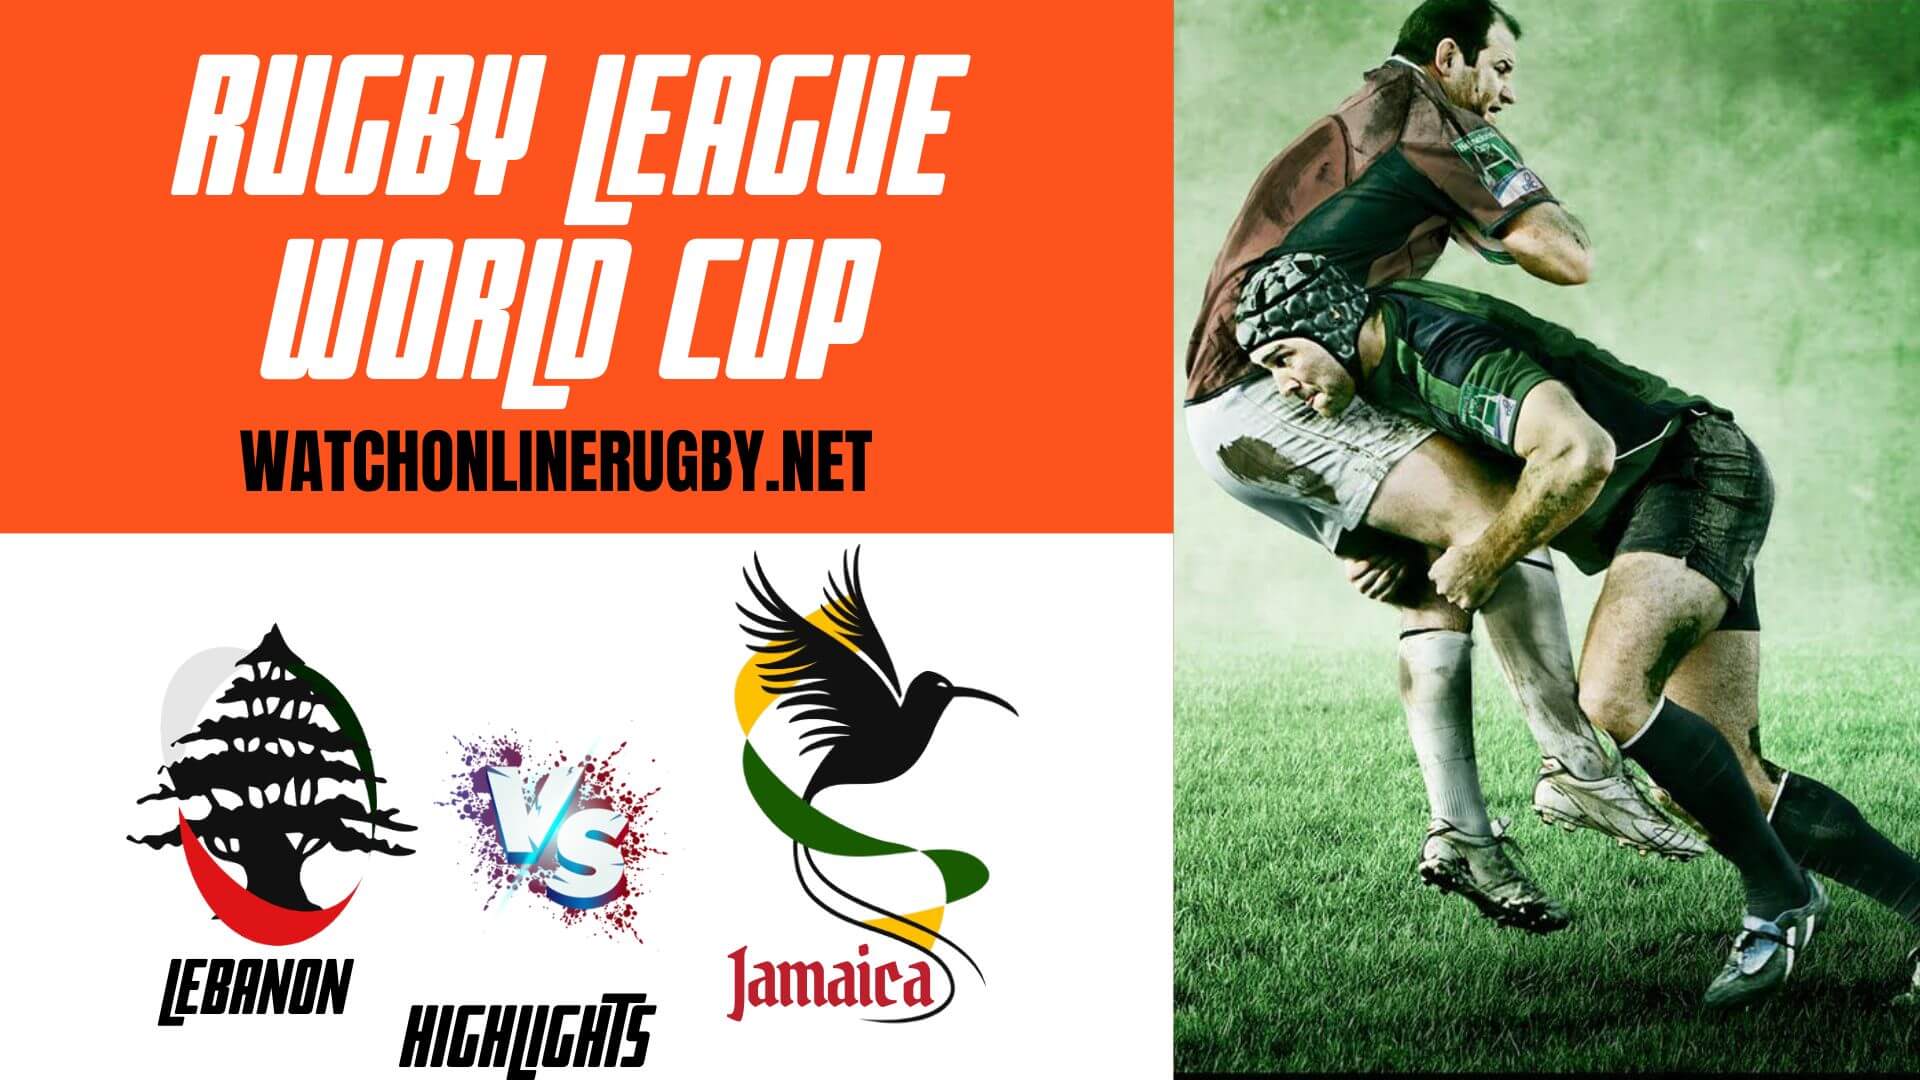 Lebanon Vs Jamaica Rugby League World Cup 2022 RD 3